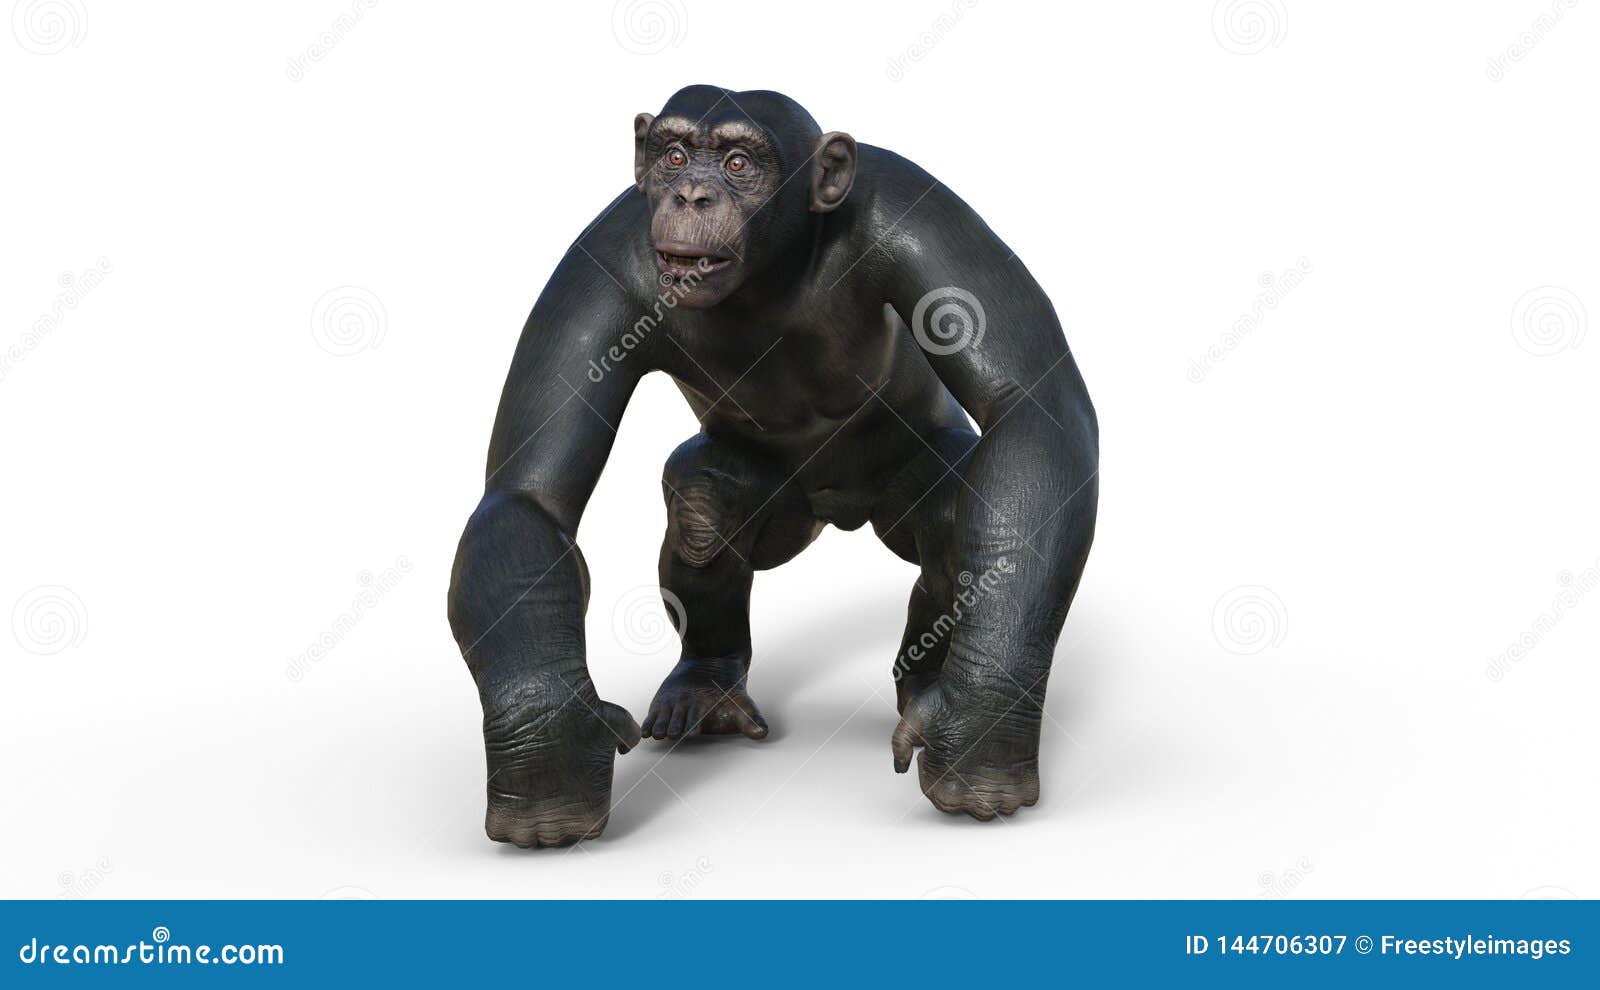 chimpanzee monkey, primate ape walking, wild animal  on white background, 3d render